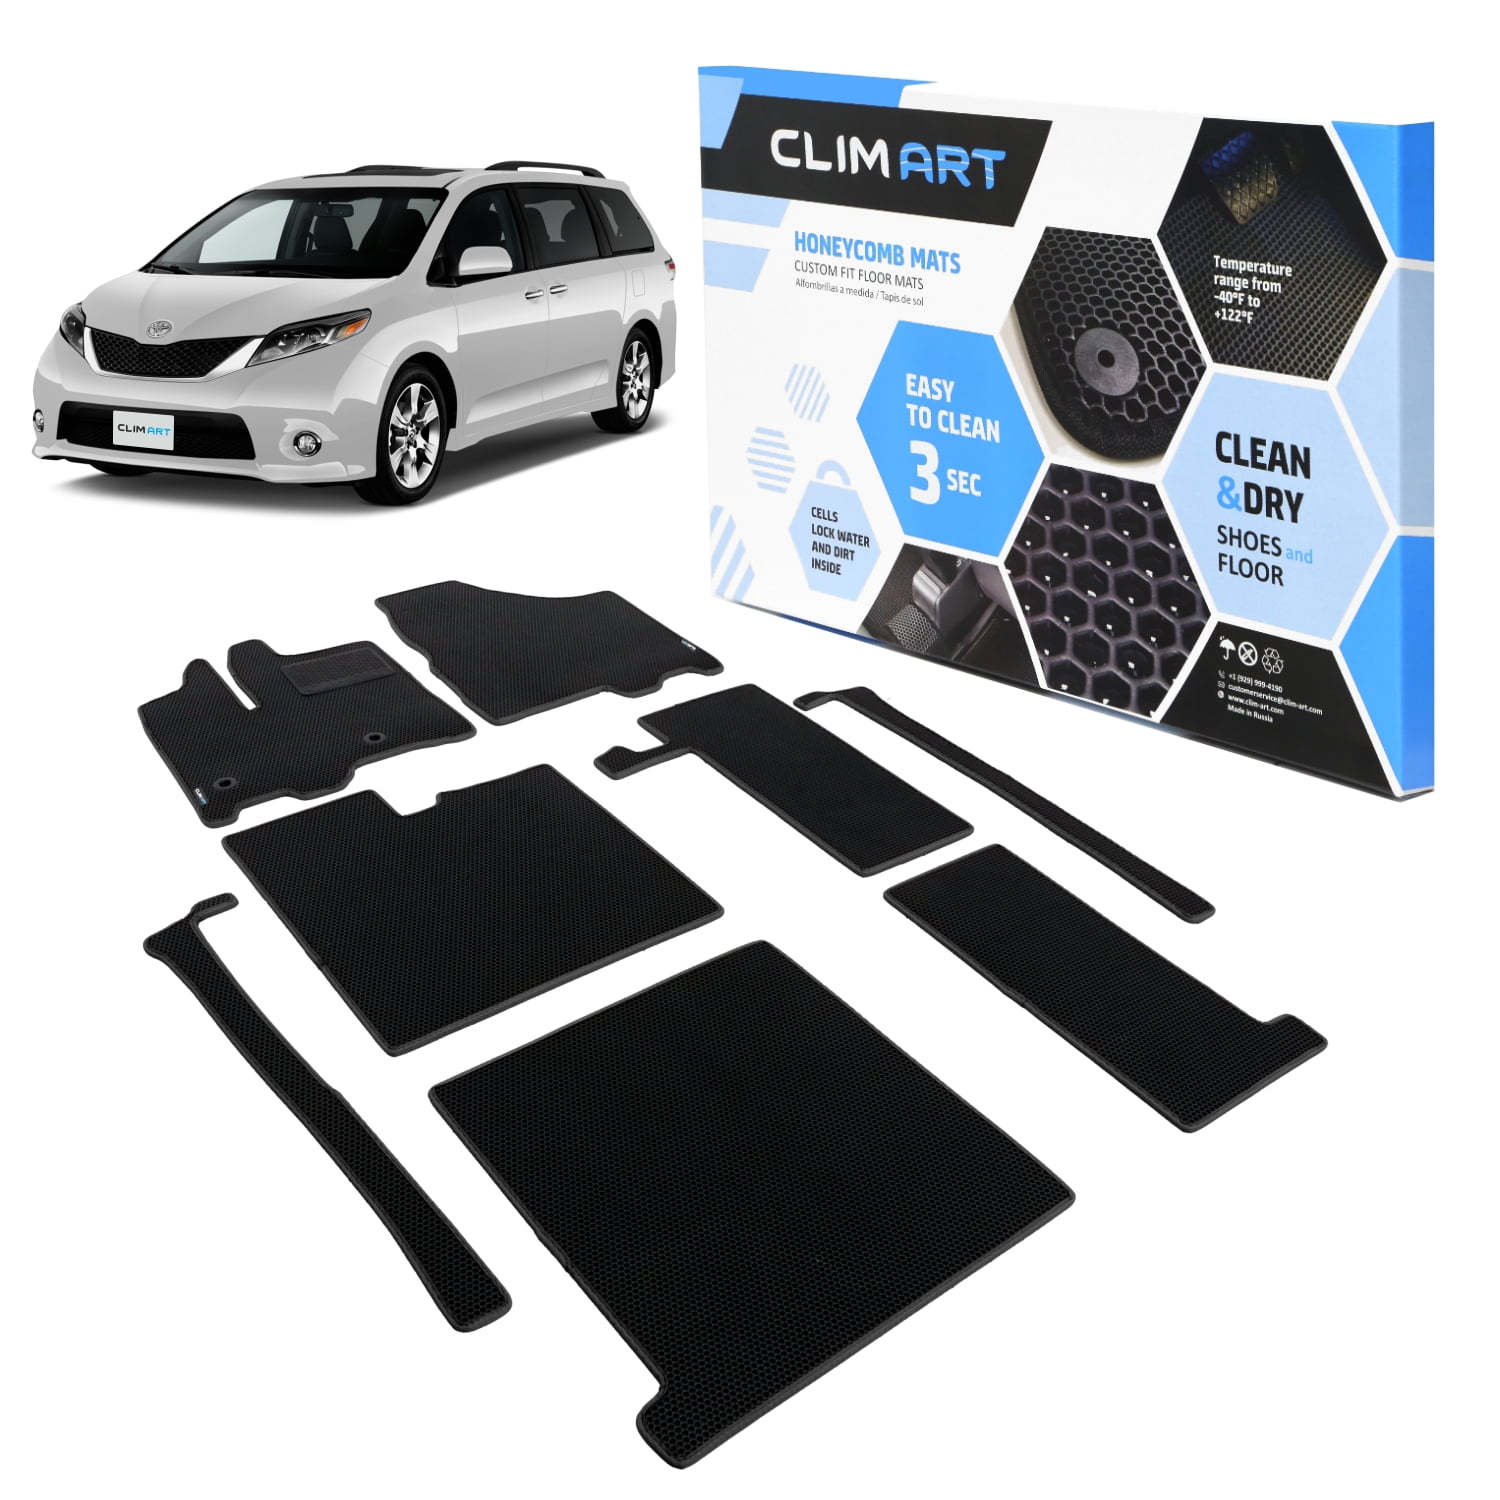 CLIM ART Honeycomb Custom Fit Floor Mats for Toyota Sienna 2013